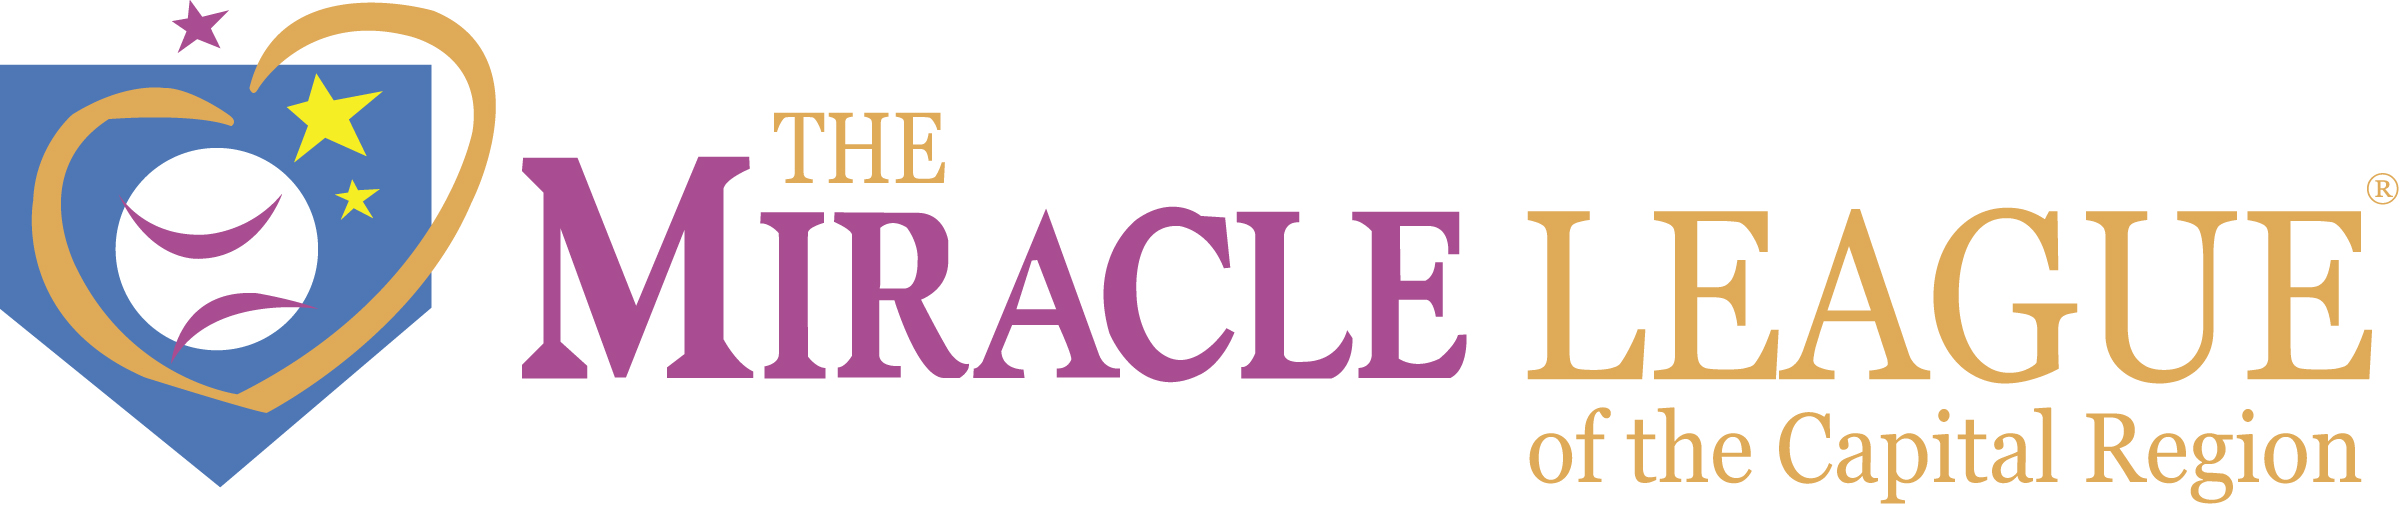 Capital Region Miracle League Logo